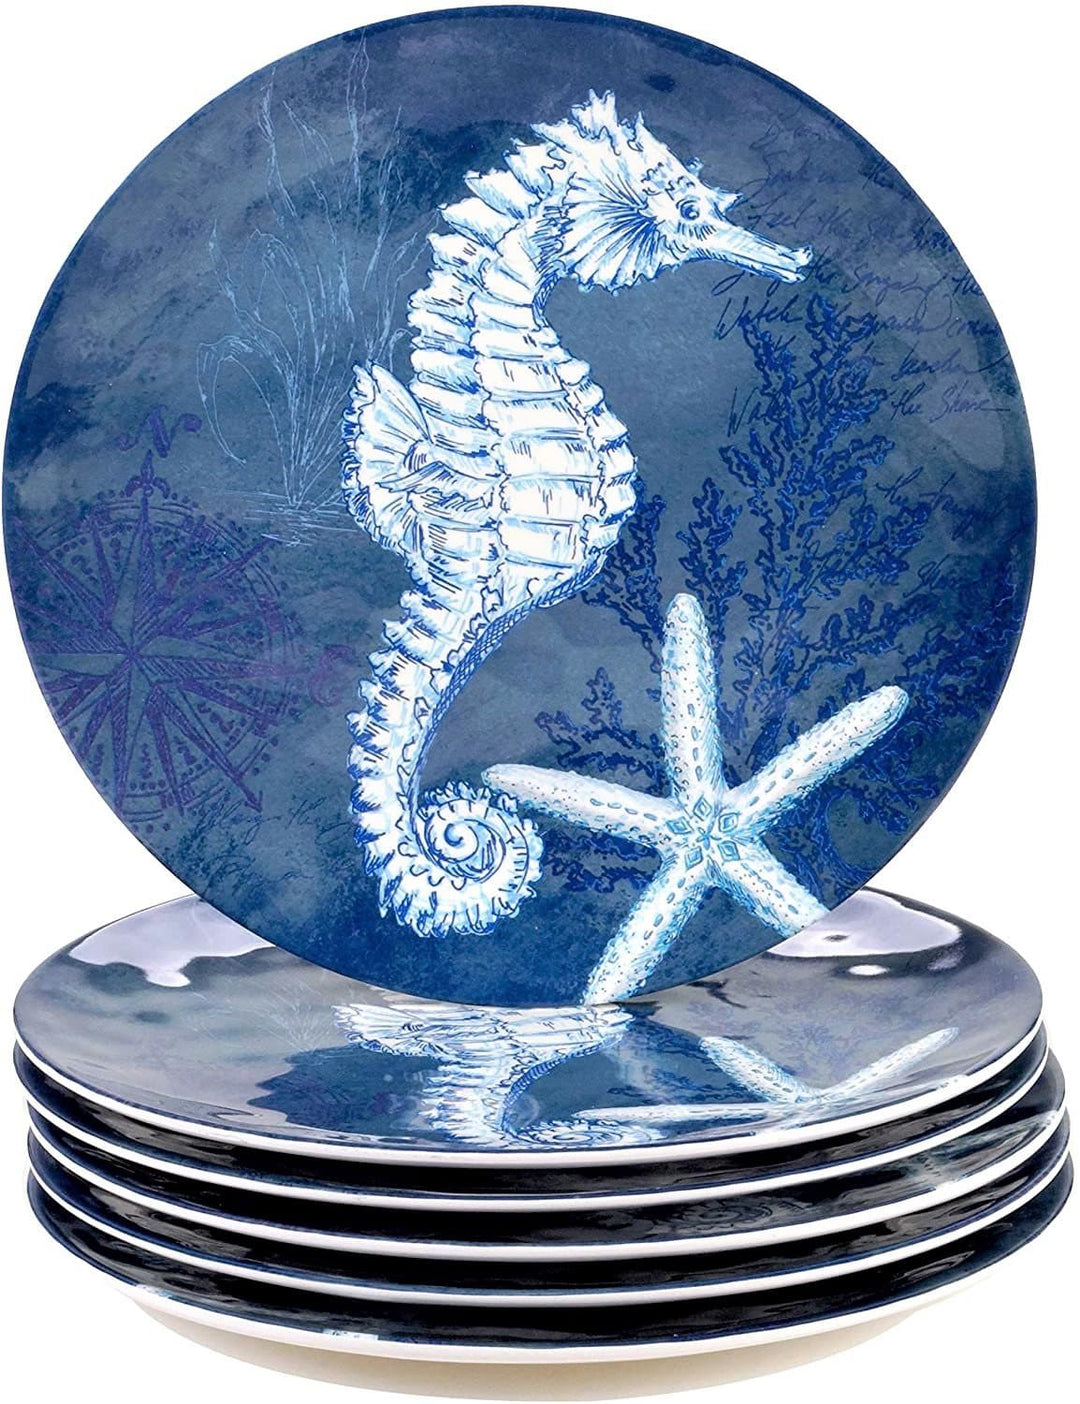 Deep blue sea coastal melamine dinnerware plates with sea horse. Coastal Compass Home Decor